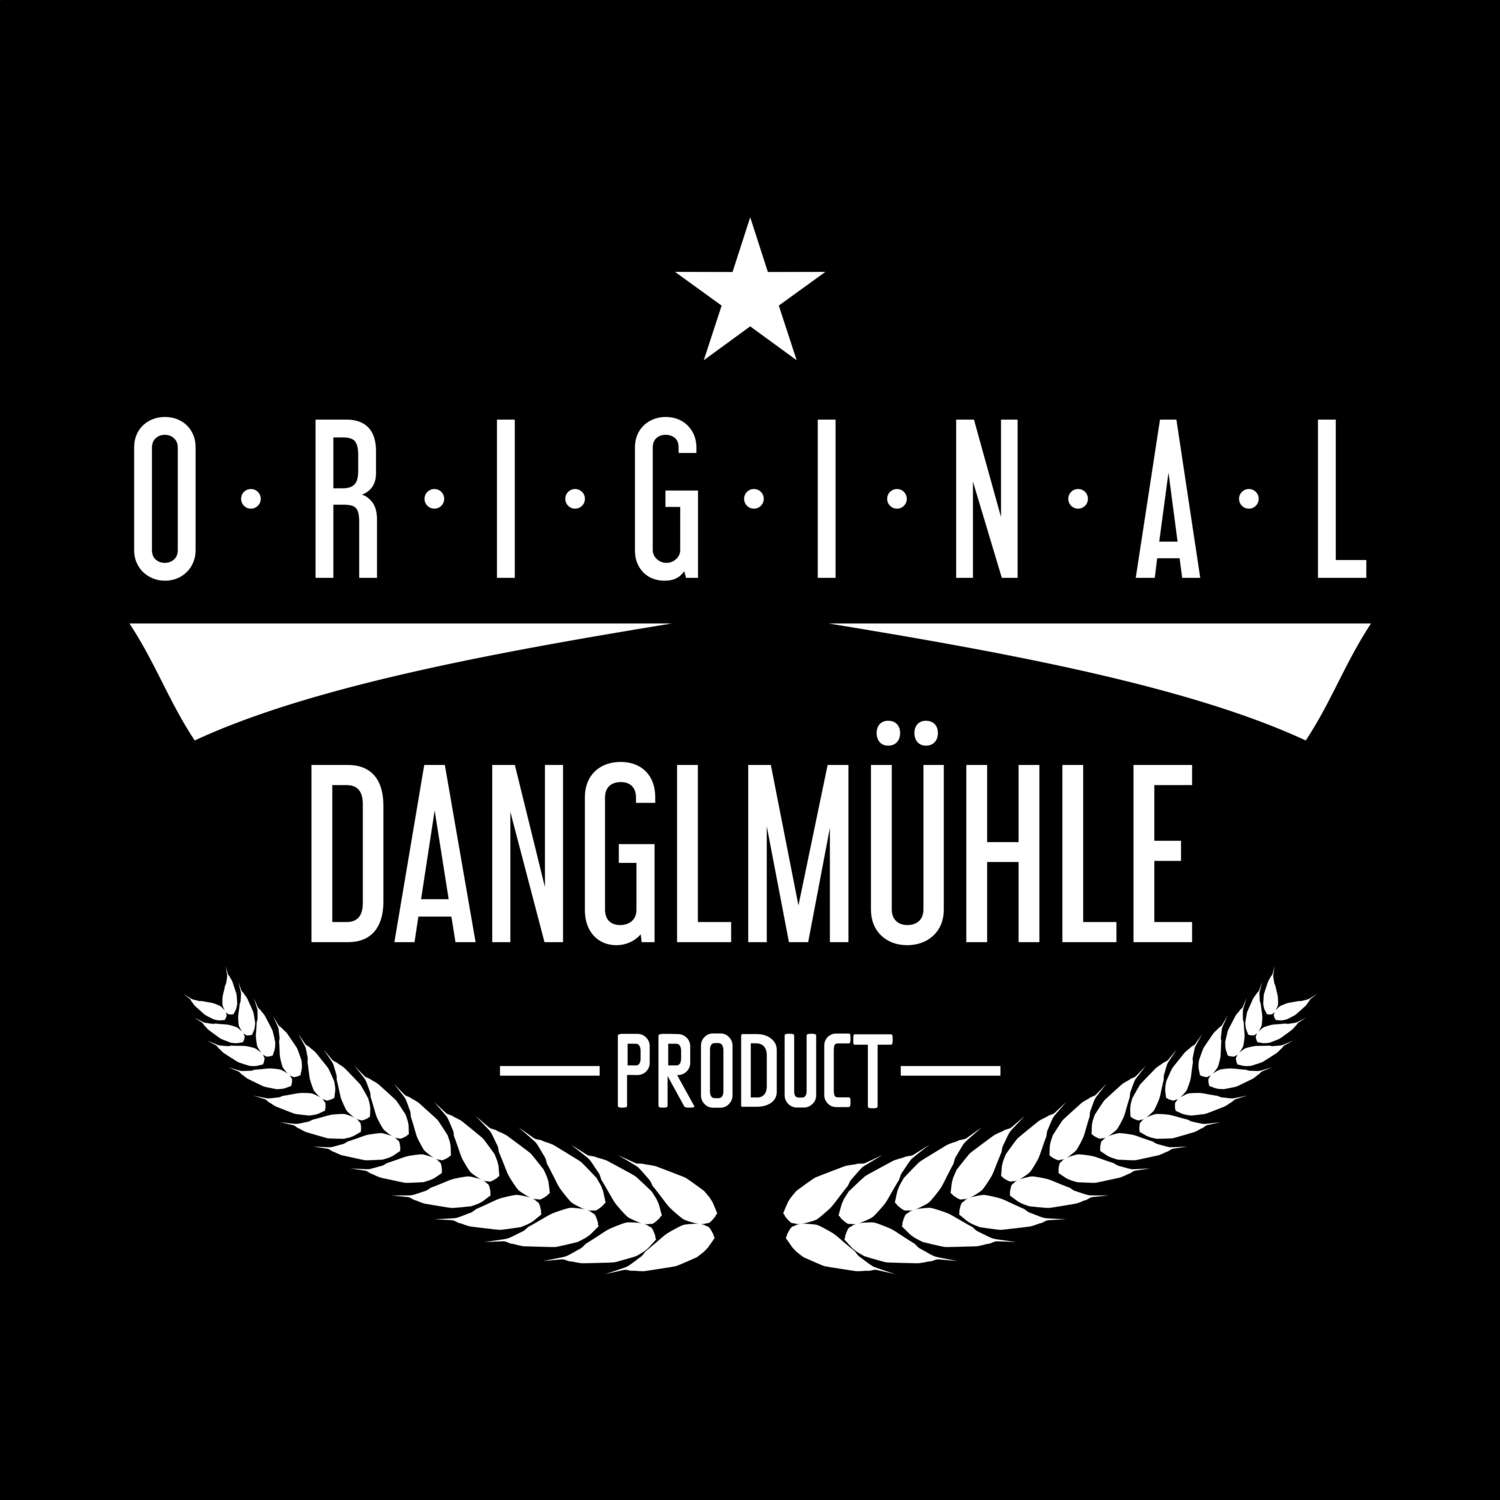 Danglmühle T-Shirt »Original Product«